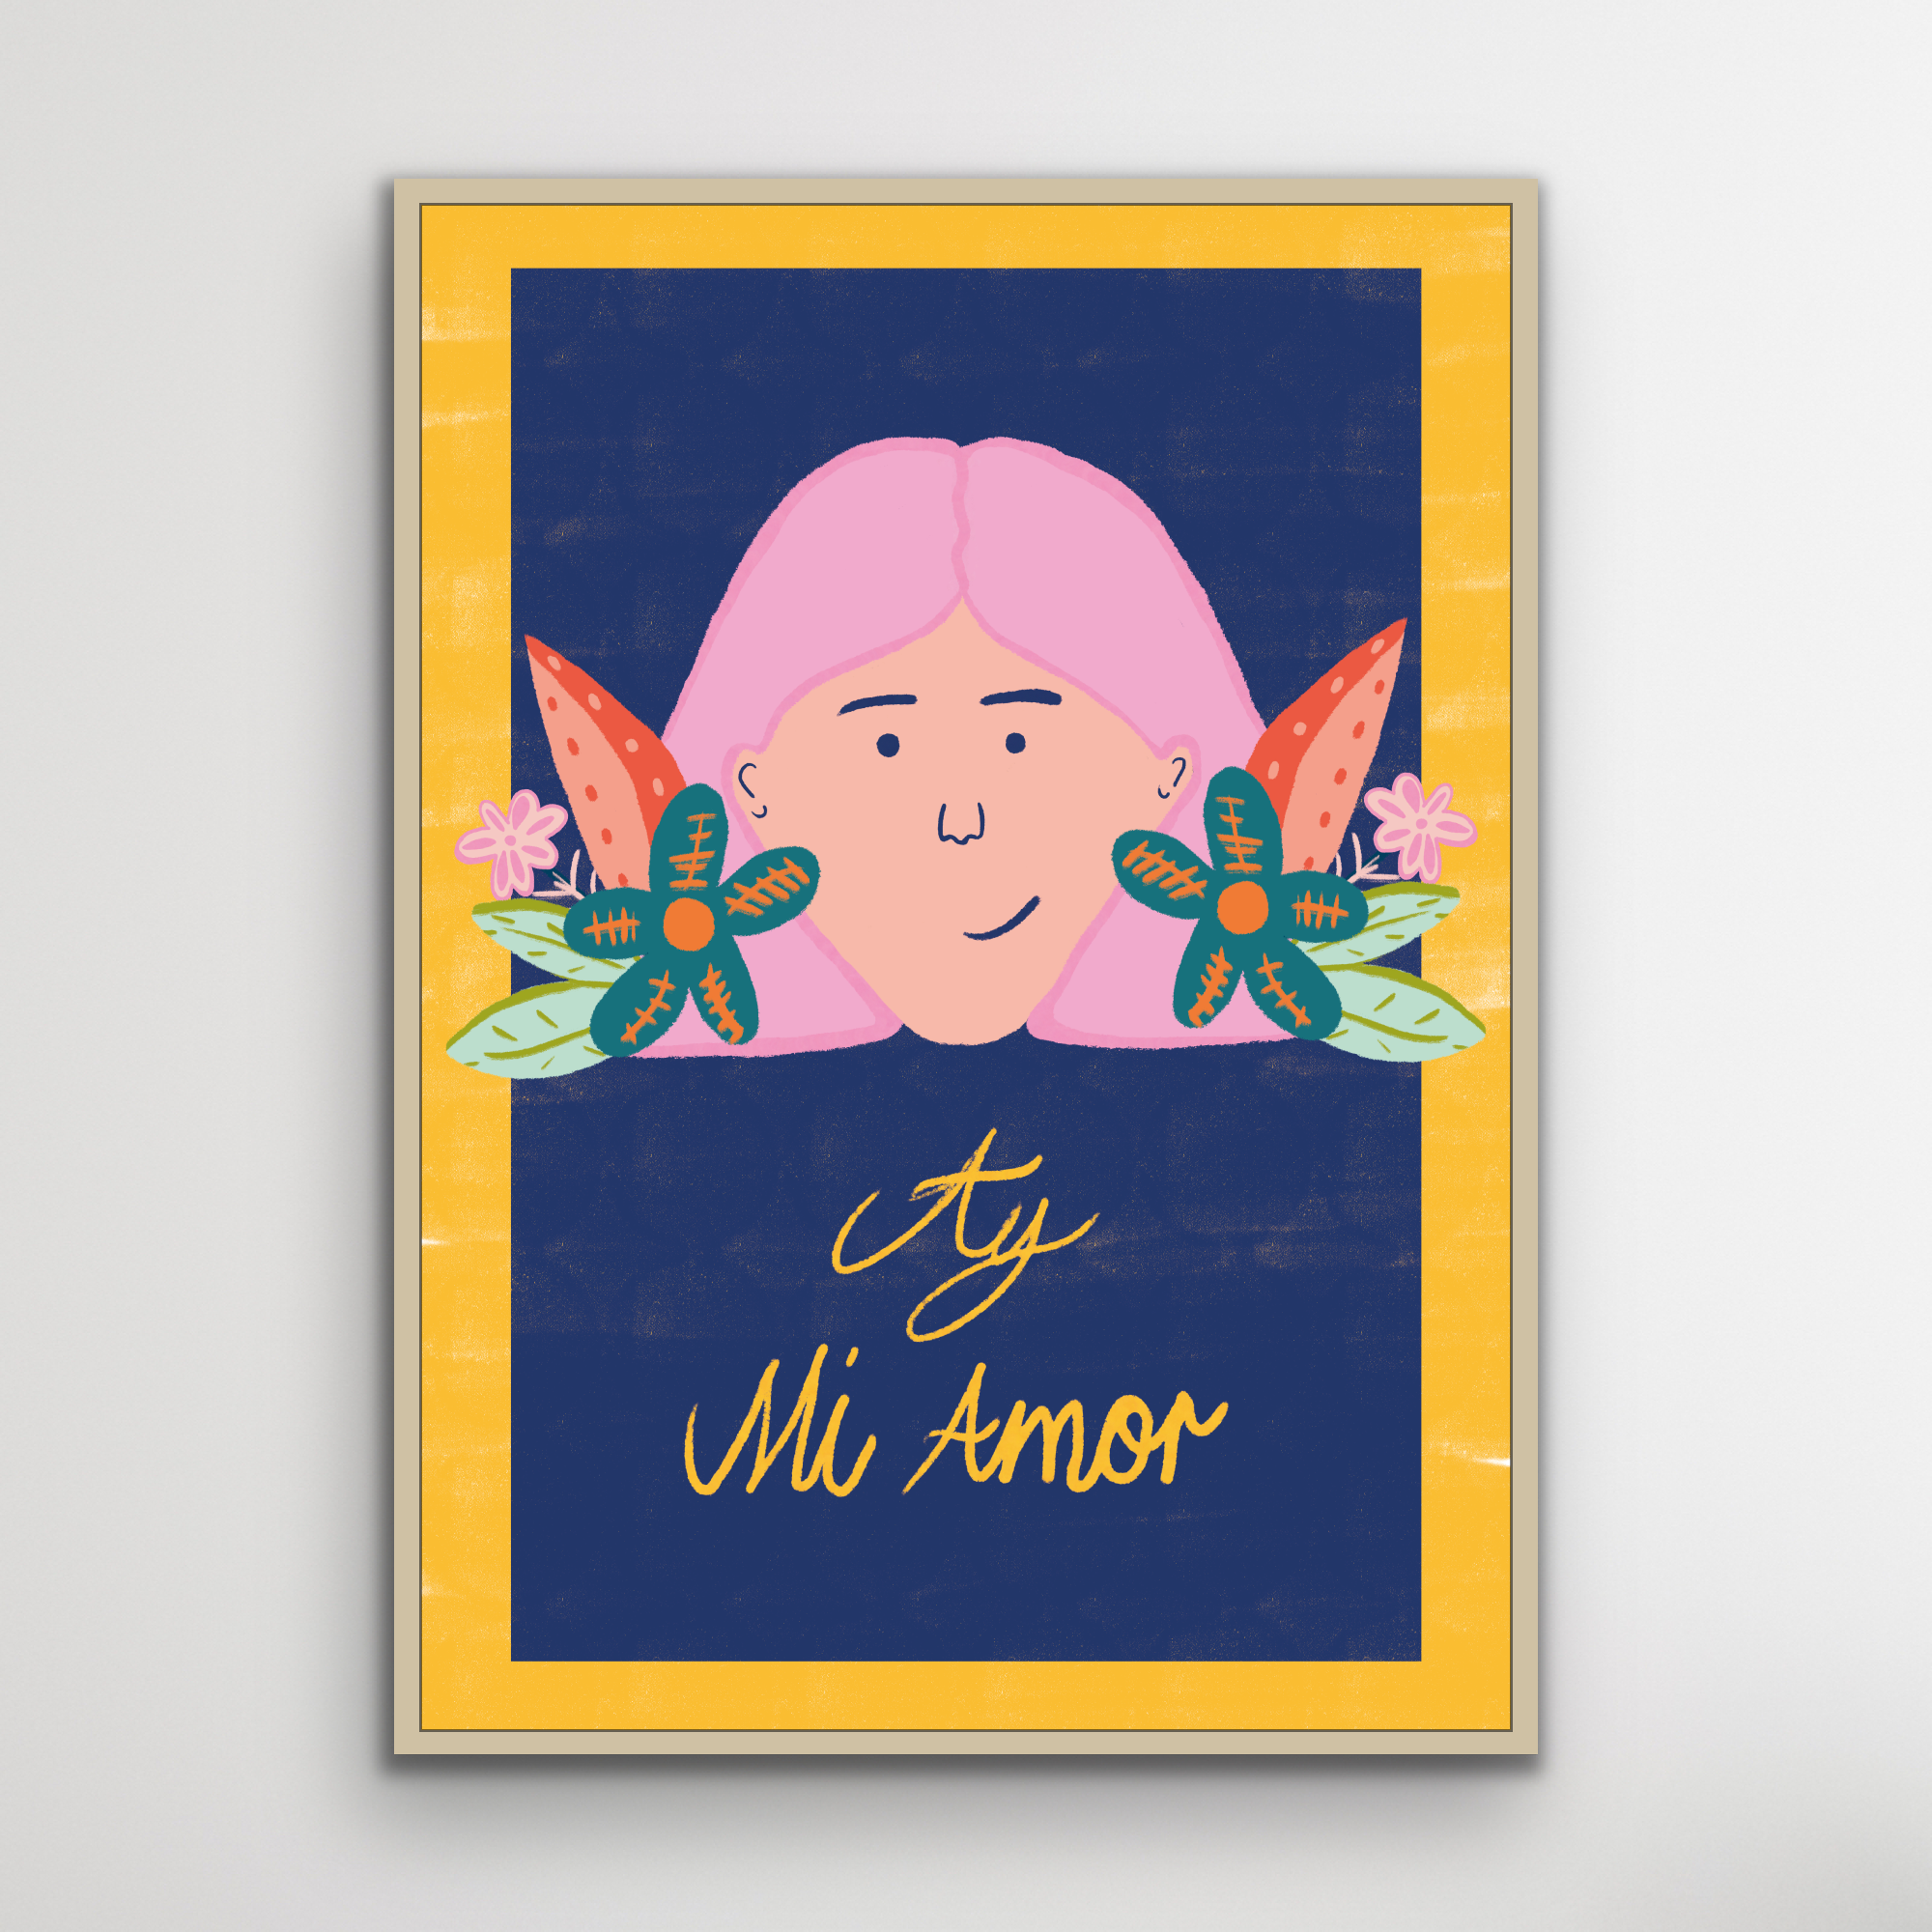 Poster: "Ay, mi amor!"